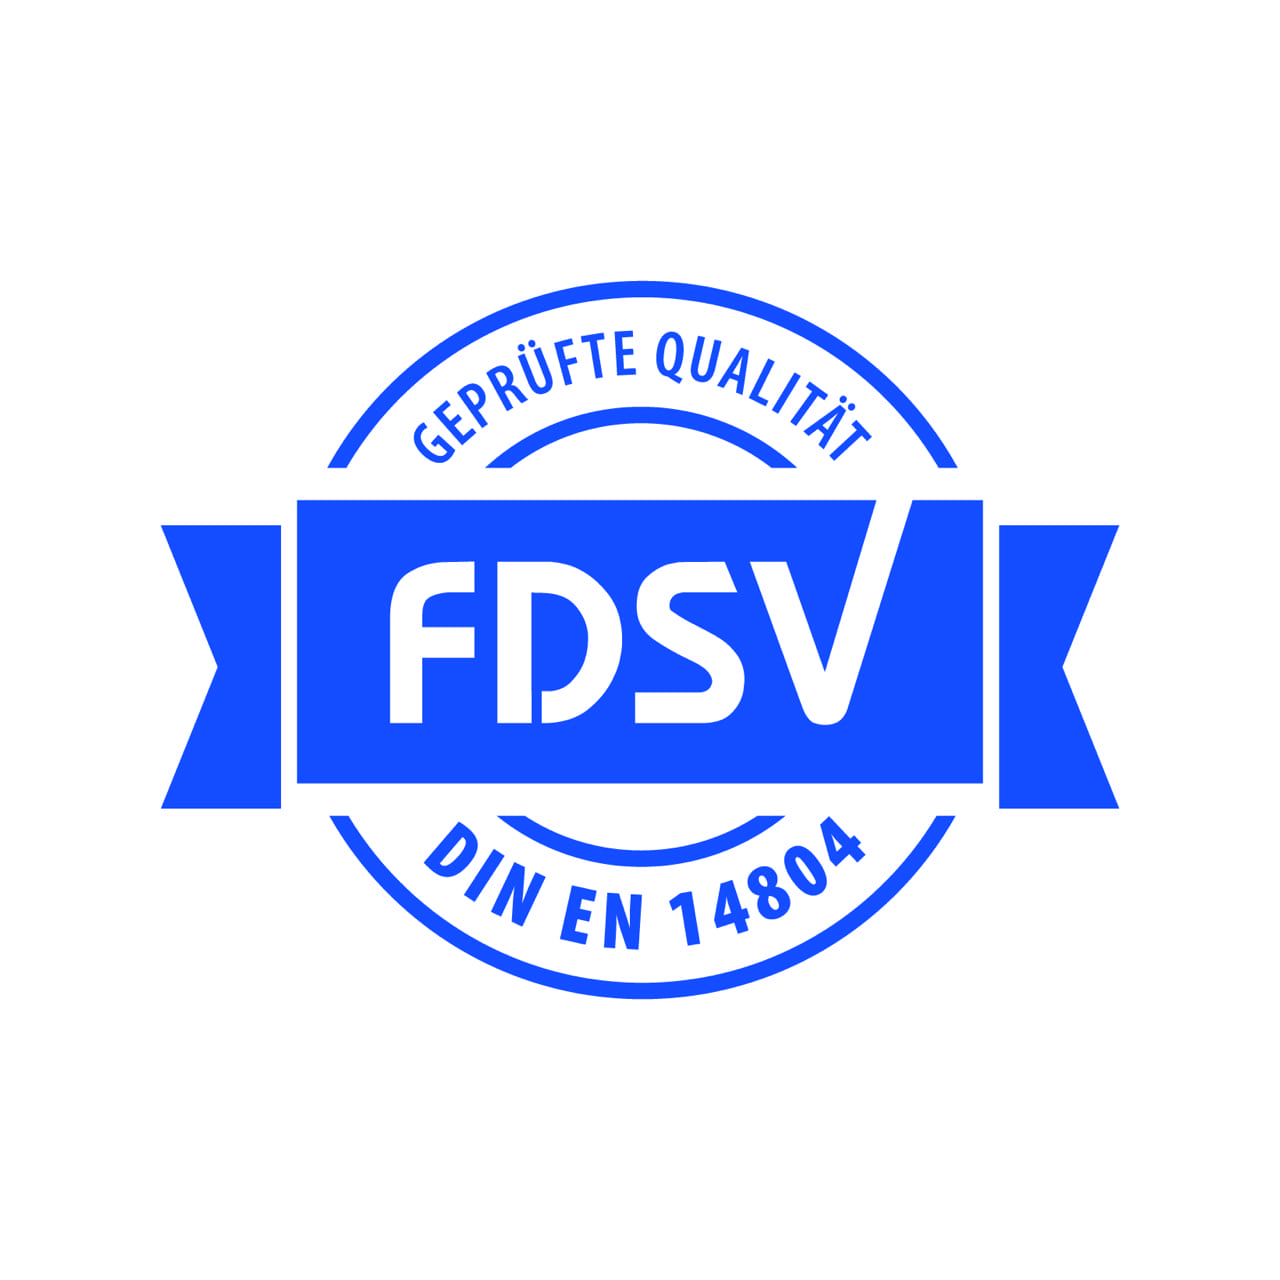 FDSV Qualitätssiegel